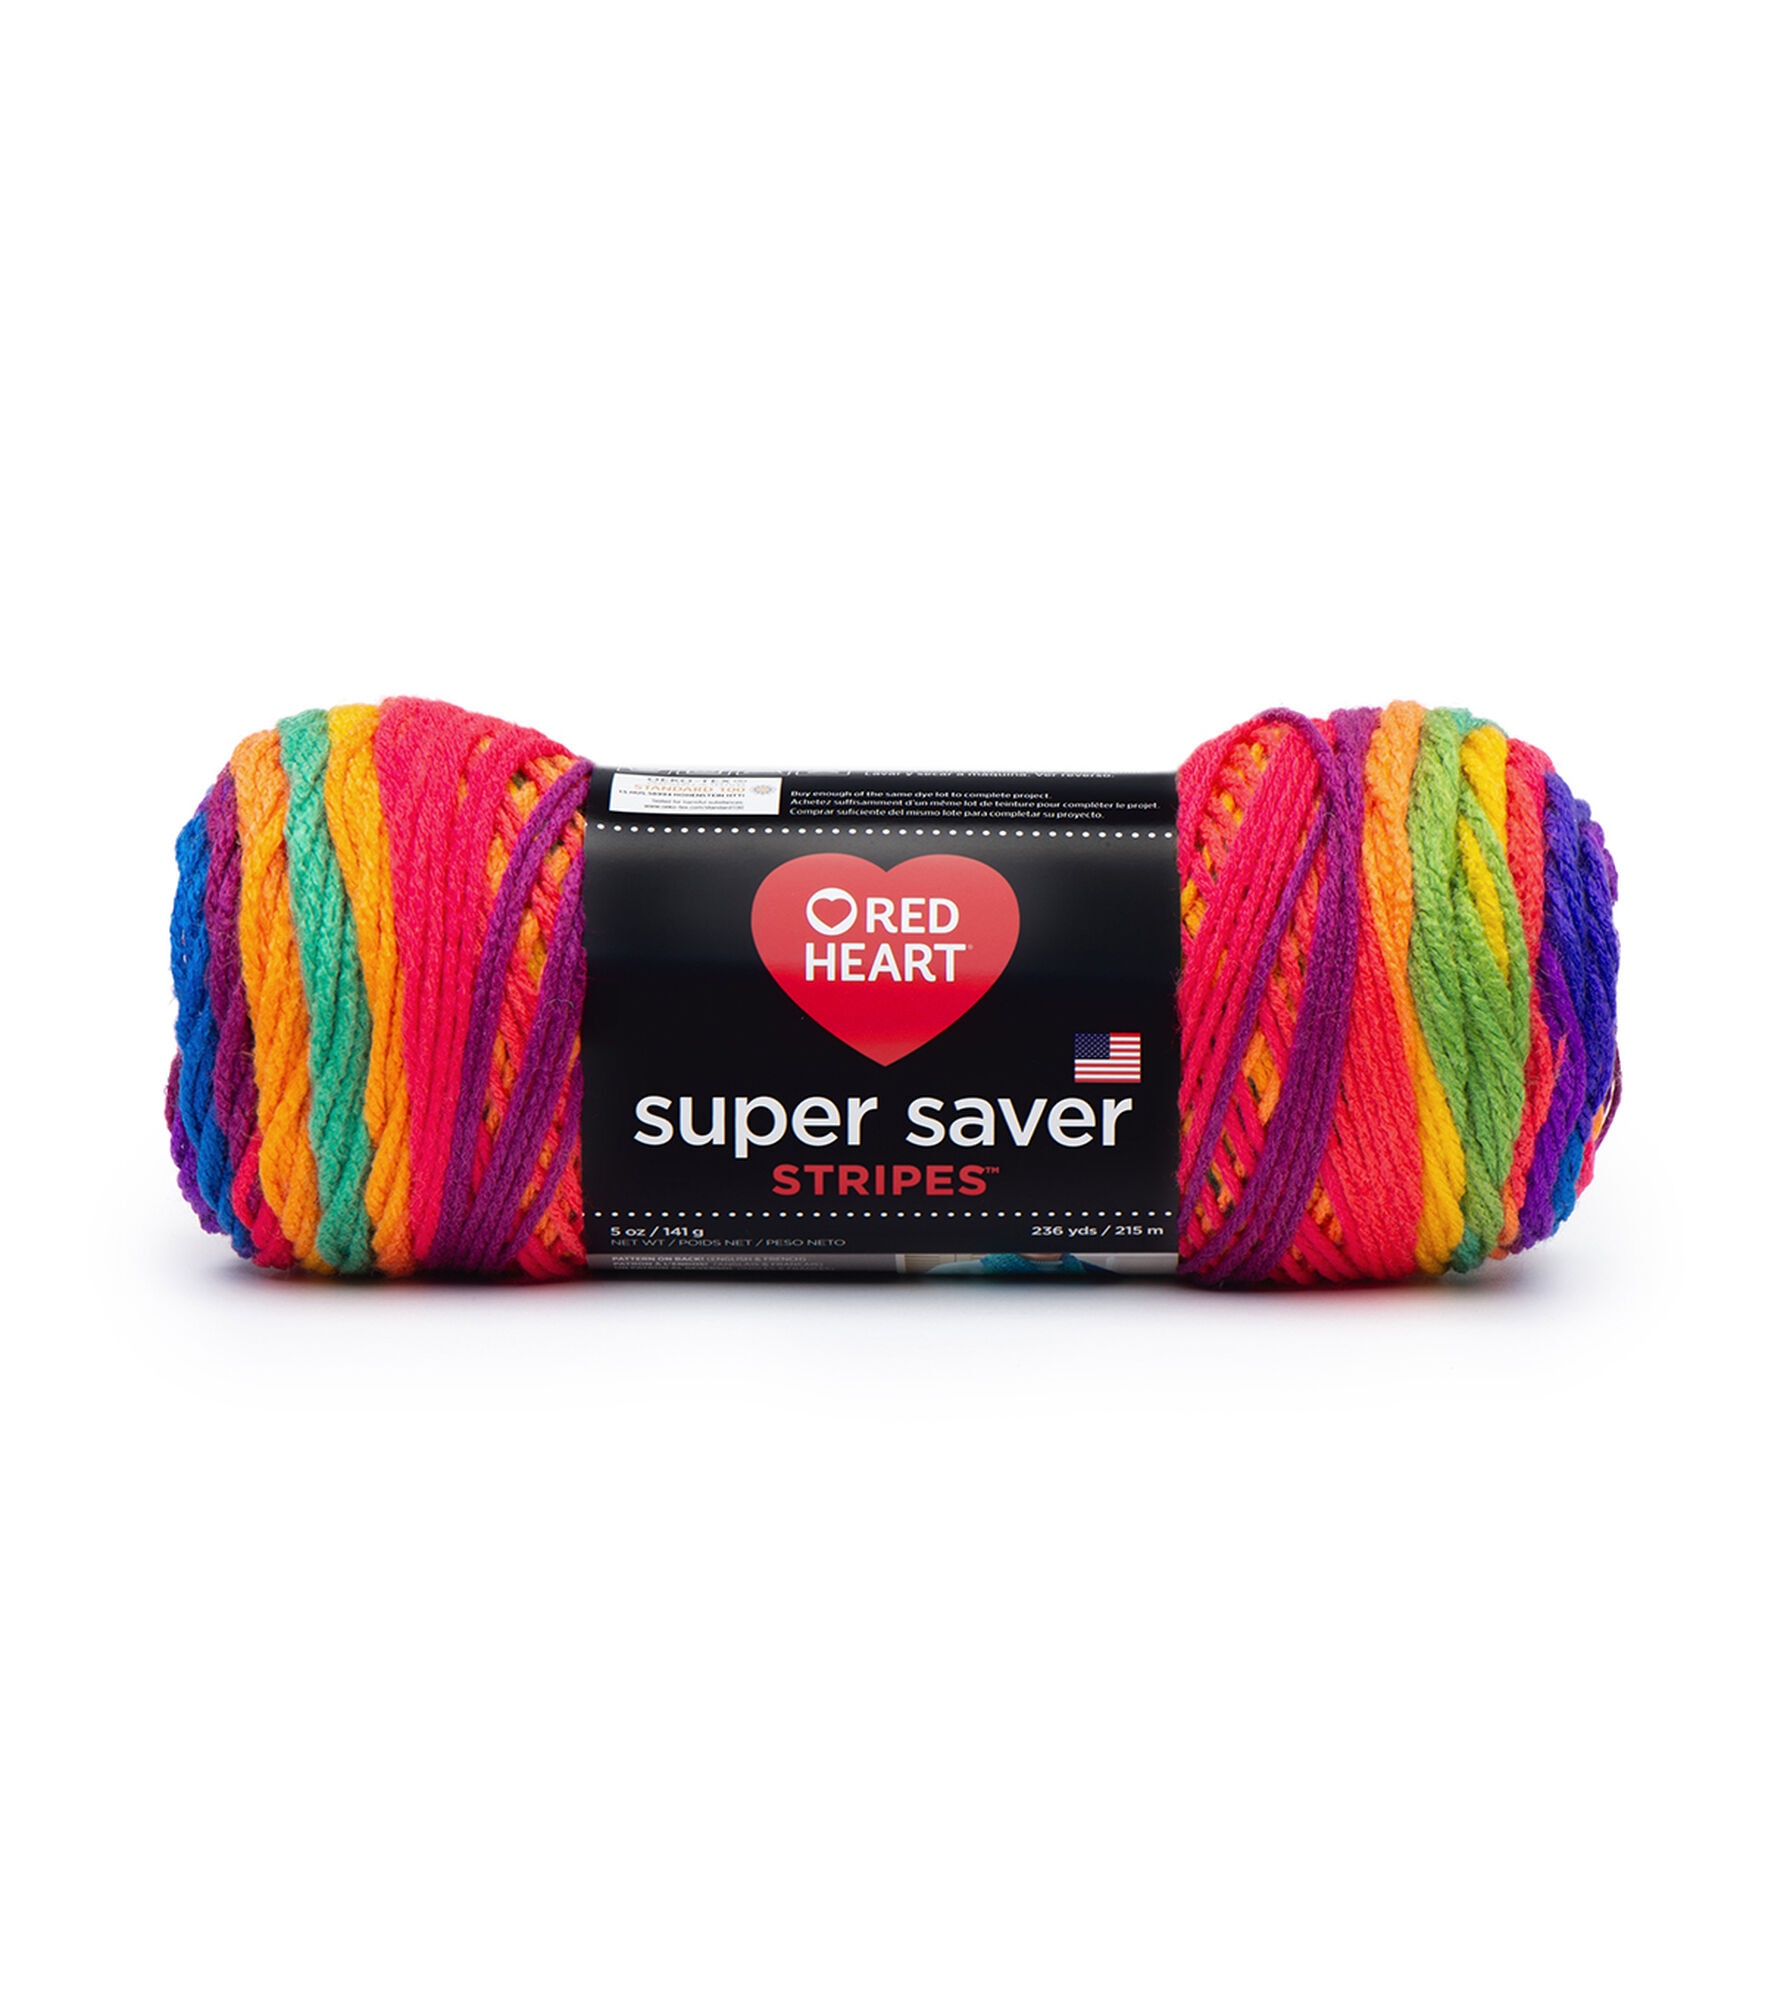 Multipack of 12 - Bernat Super Value Stripes Yarn-Candy Store